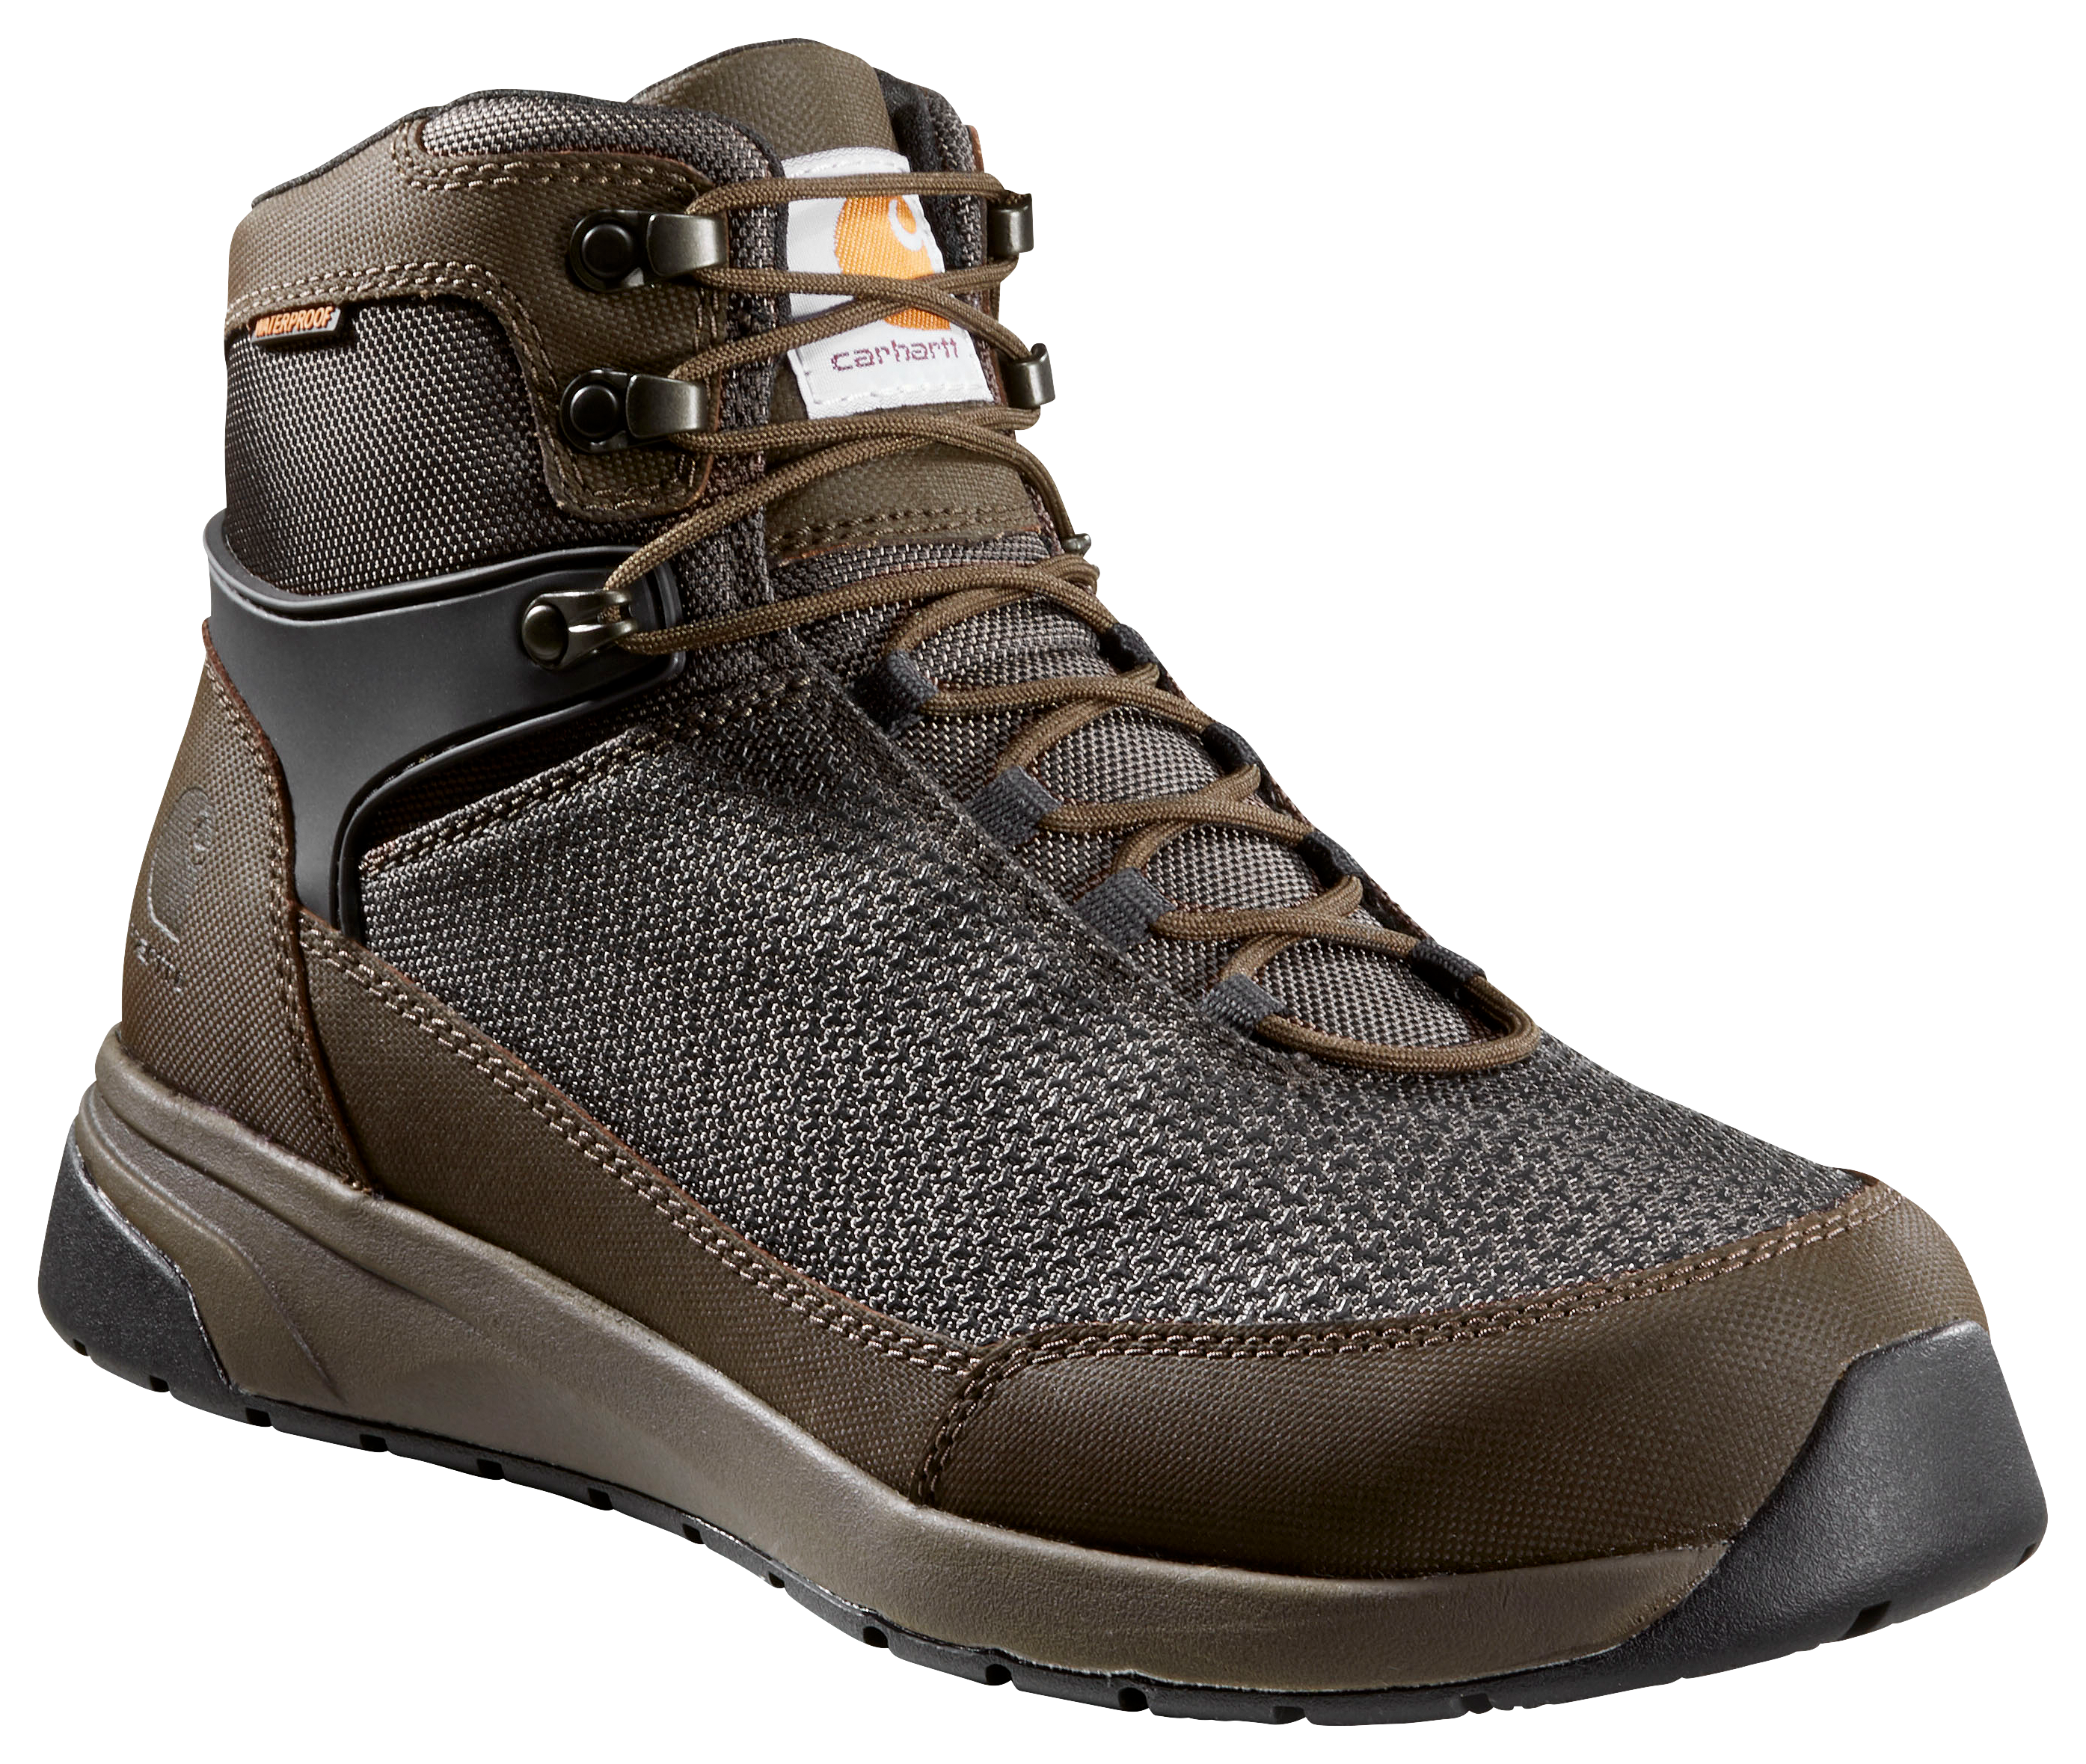 Carhartt Force 6"" Nano Composite-Toe Work Boots for Men - Espresso - 8.5M